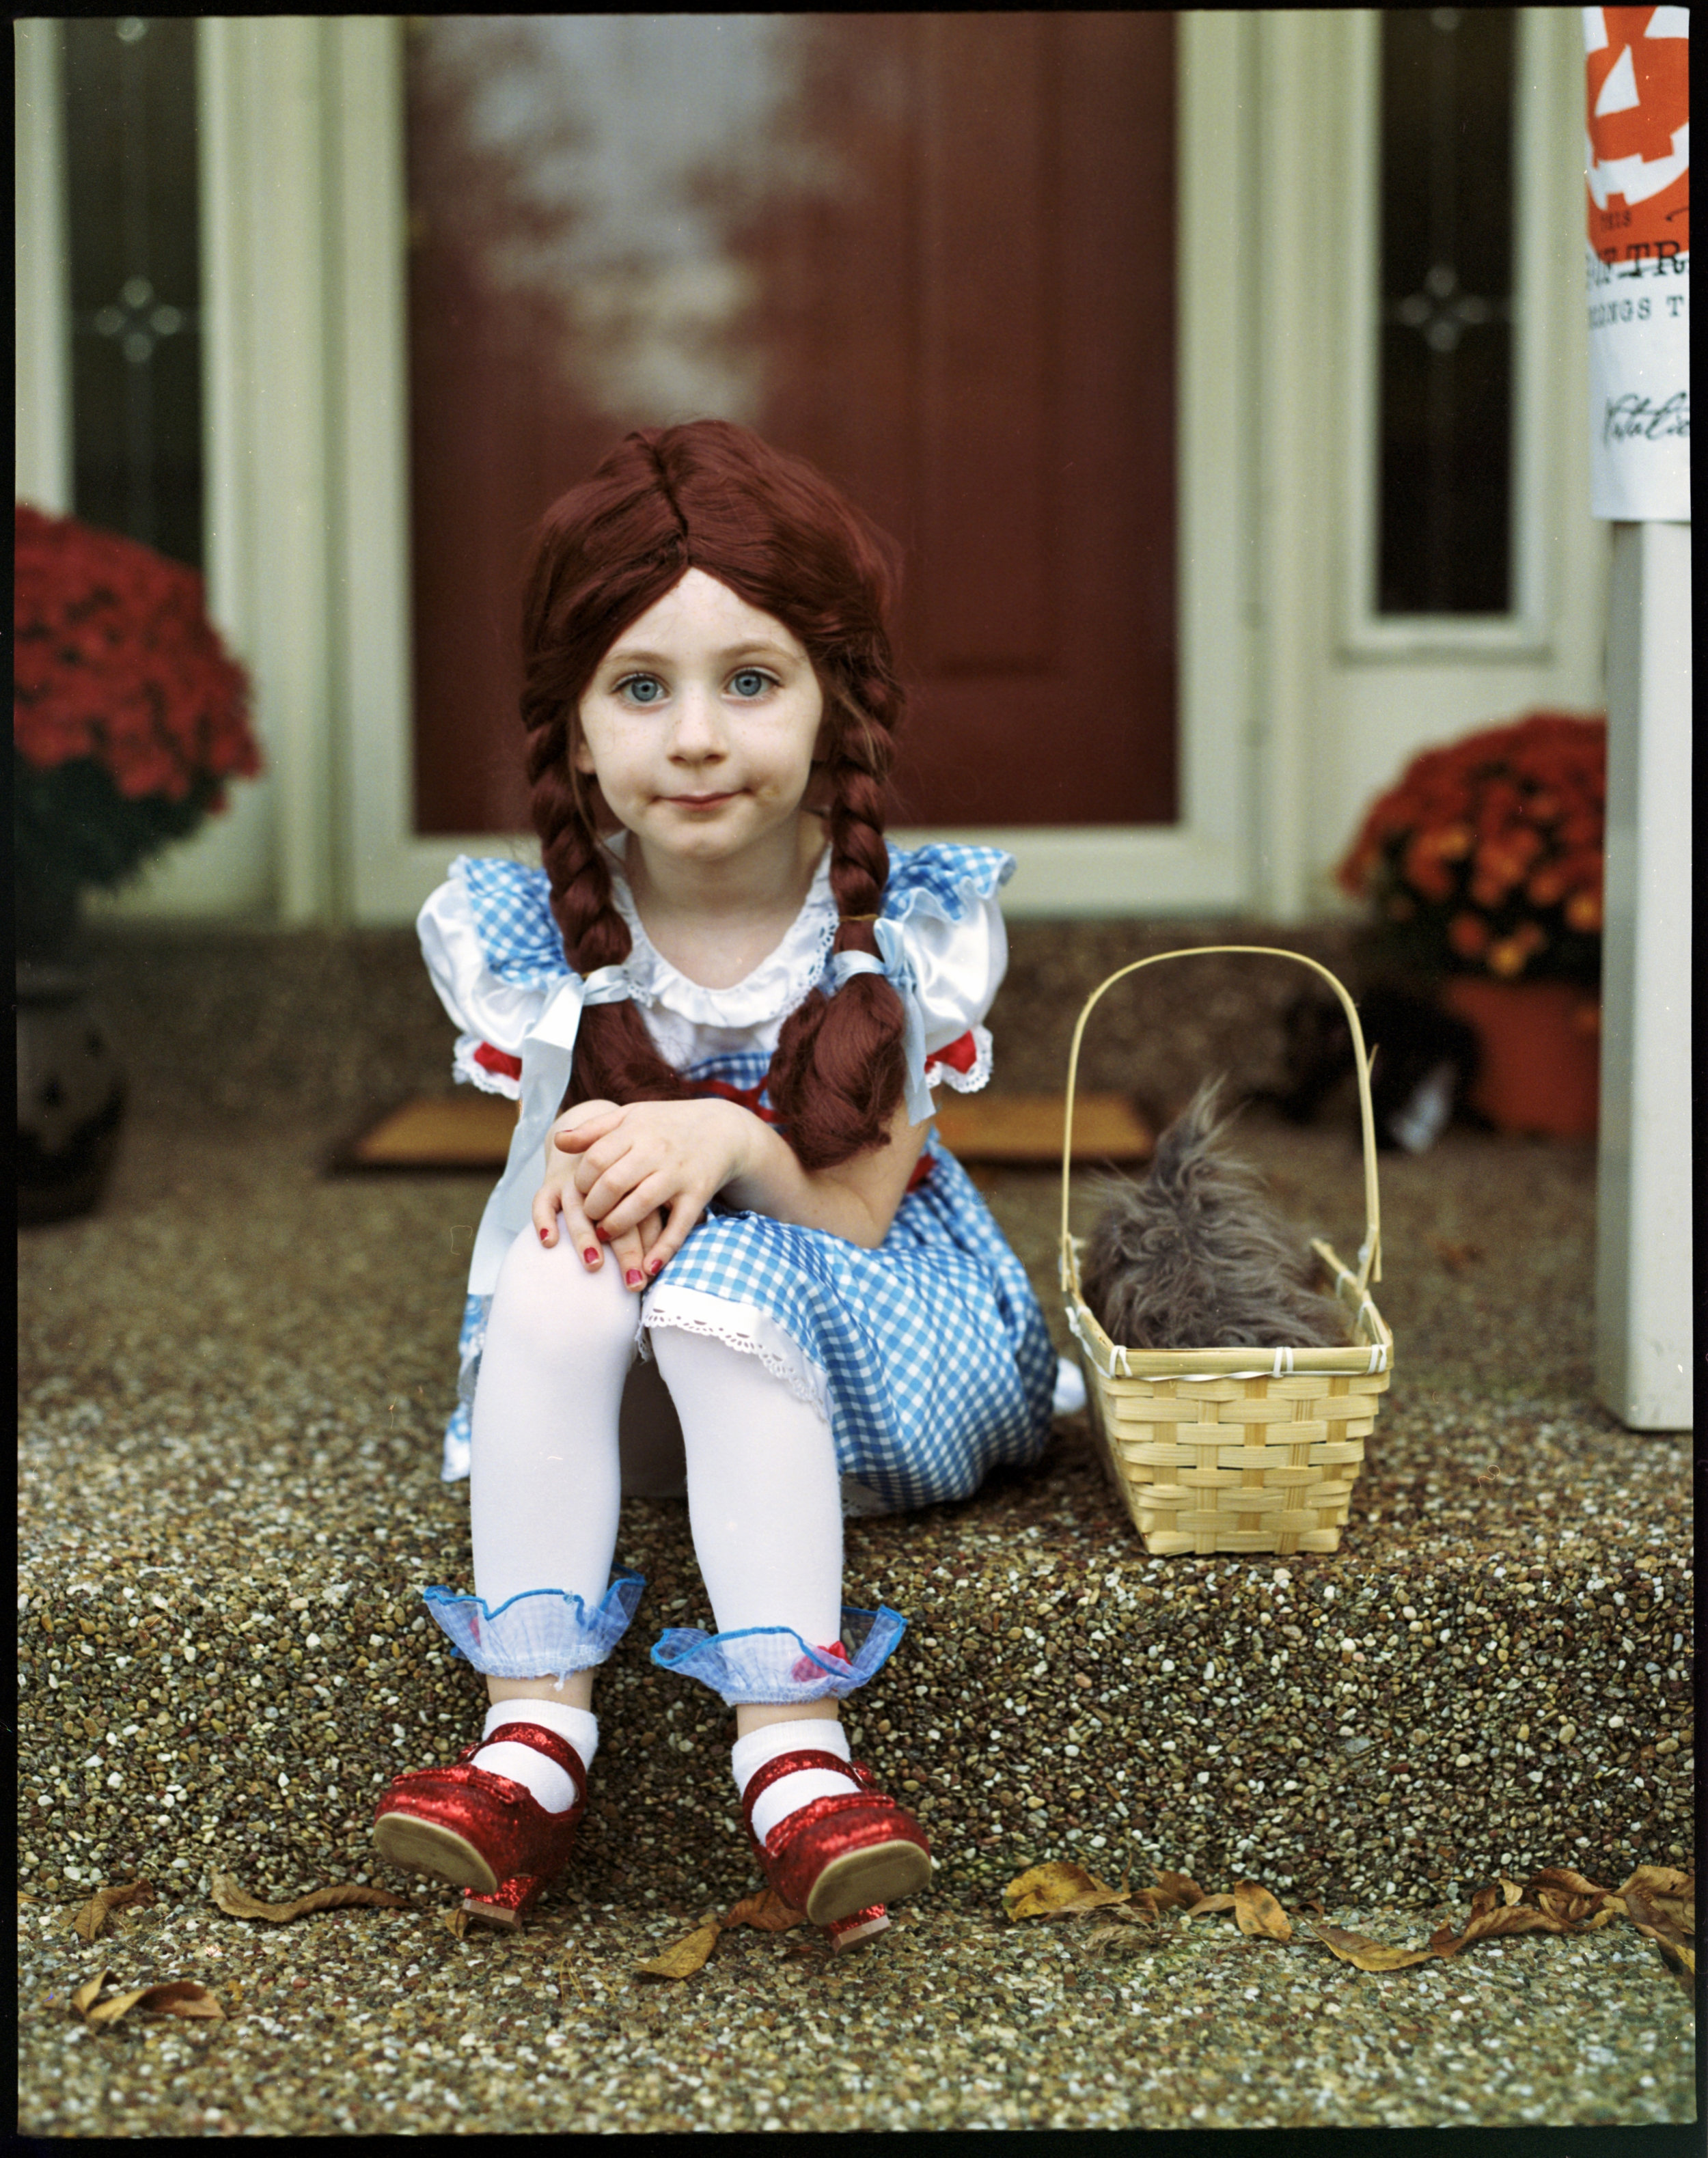 At Home with Dorothy | Pentax 67ii | Kodak Portra | Ellen Goodman